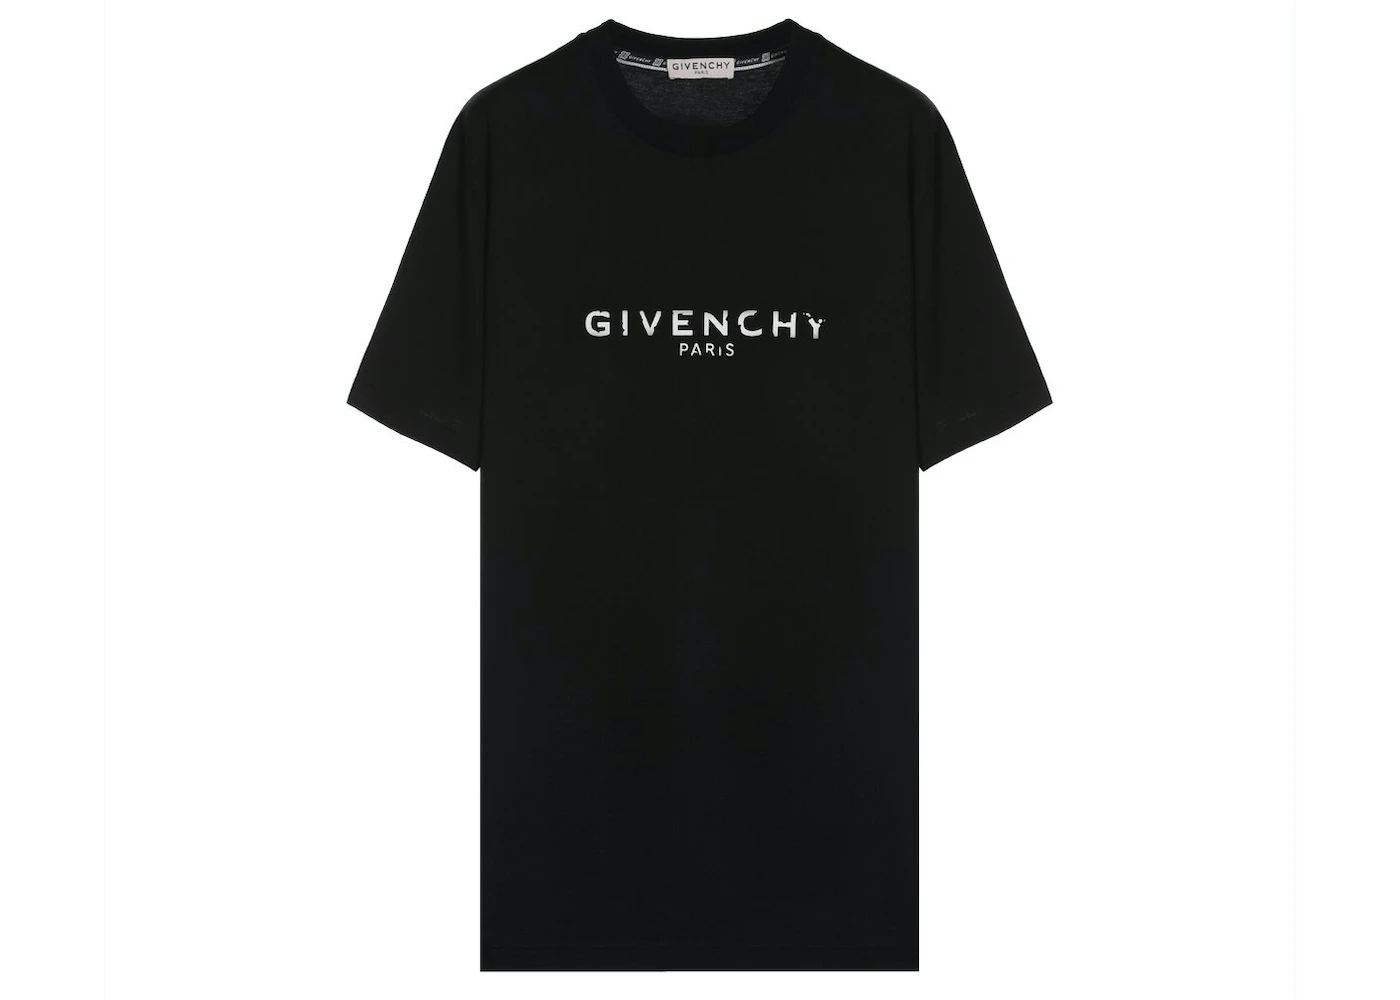 Givenchy Paris Oversized T-shirt Black Men's - SS21 - GB